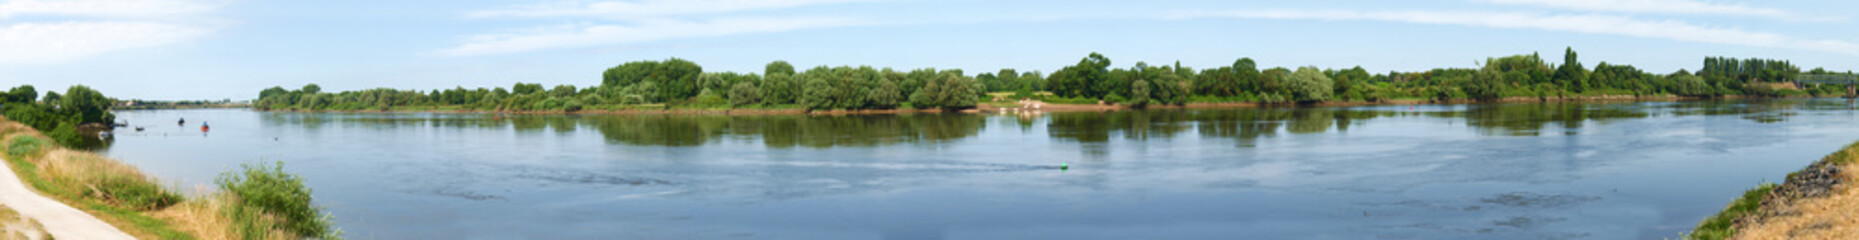 The river Loire